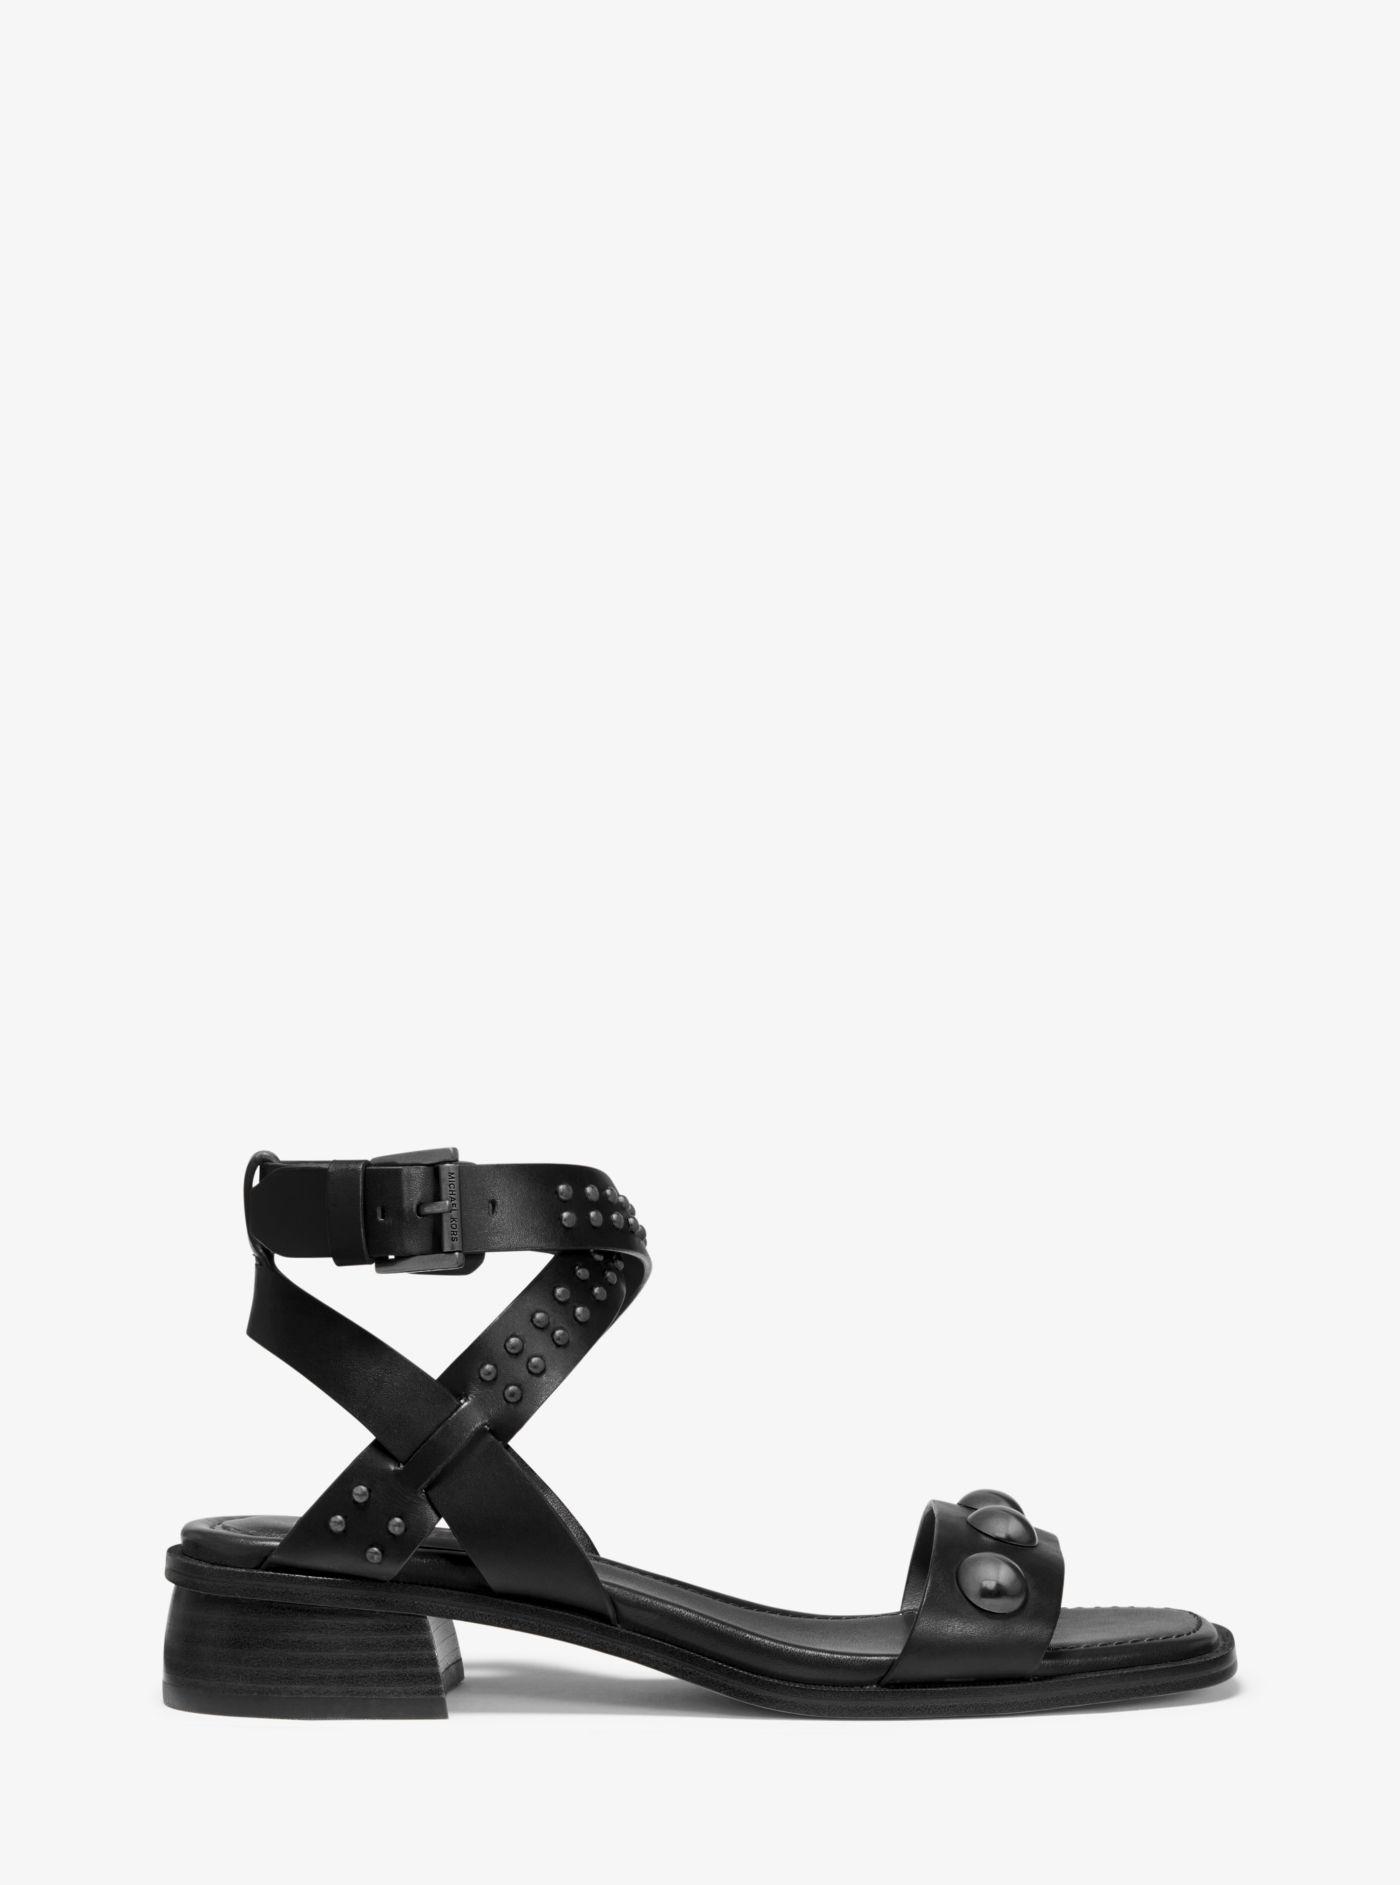 Michael Kors Mk Garner Studded Leather Sandal in Black - Lyst